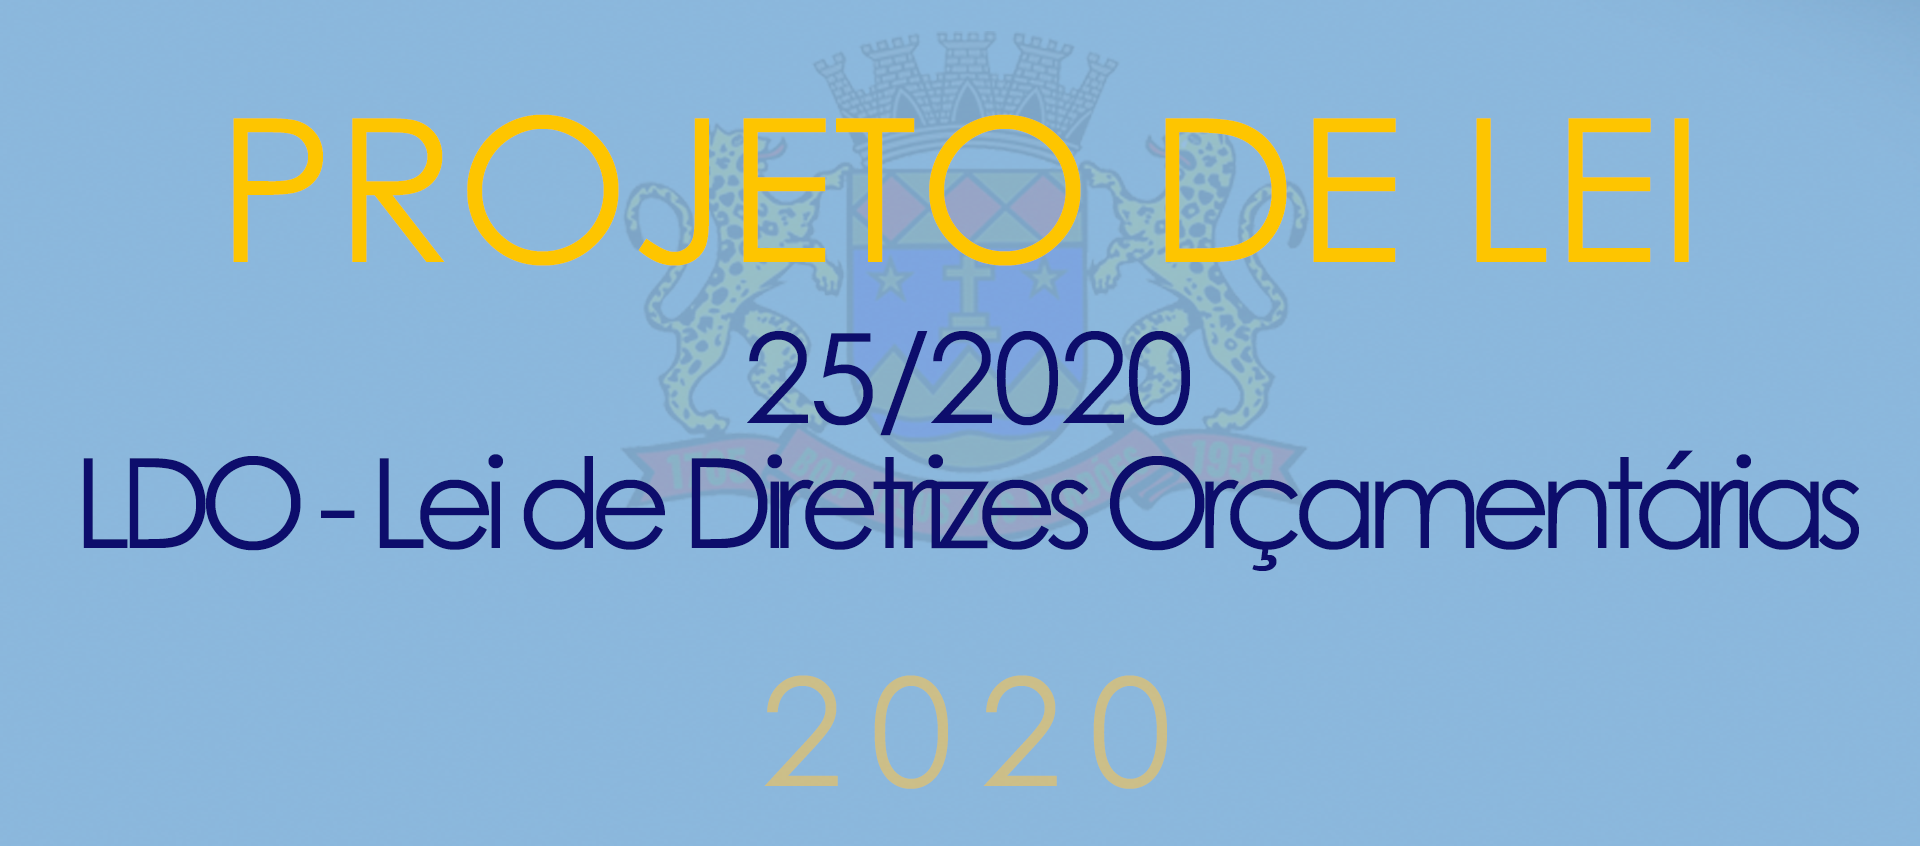 Projeto de Lei nº 25/2020 - LDO para 2021